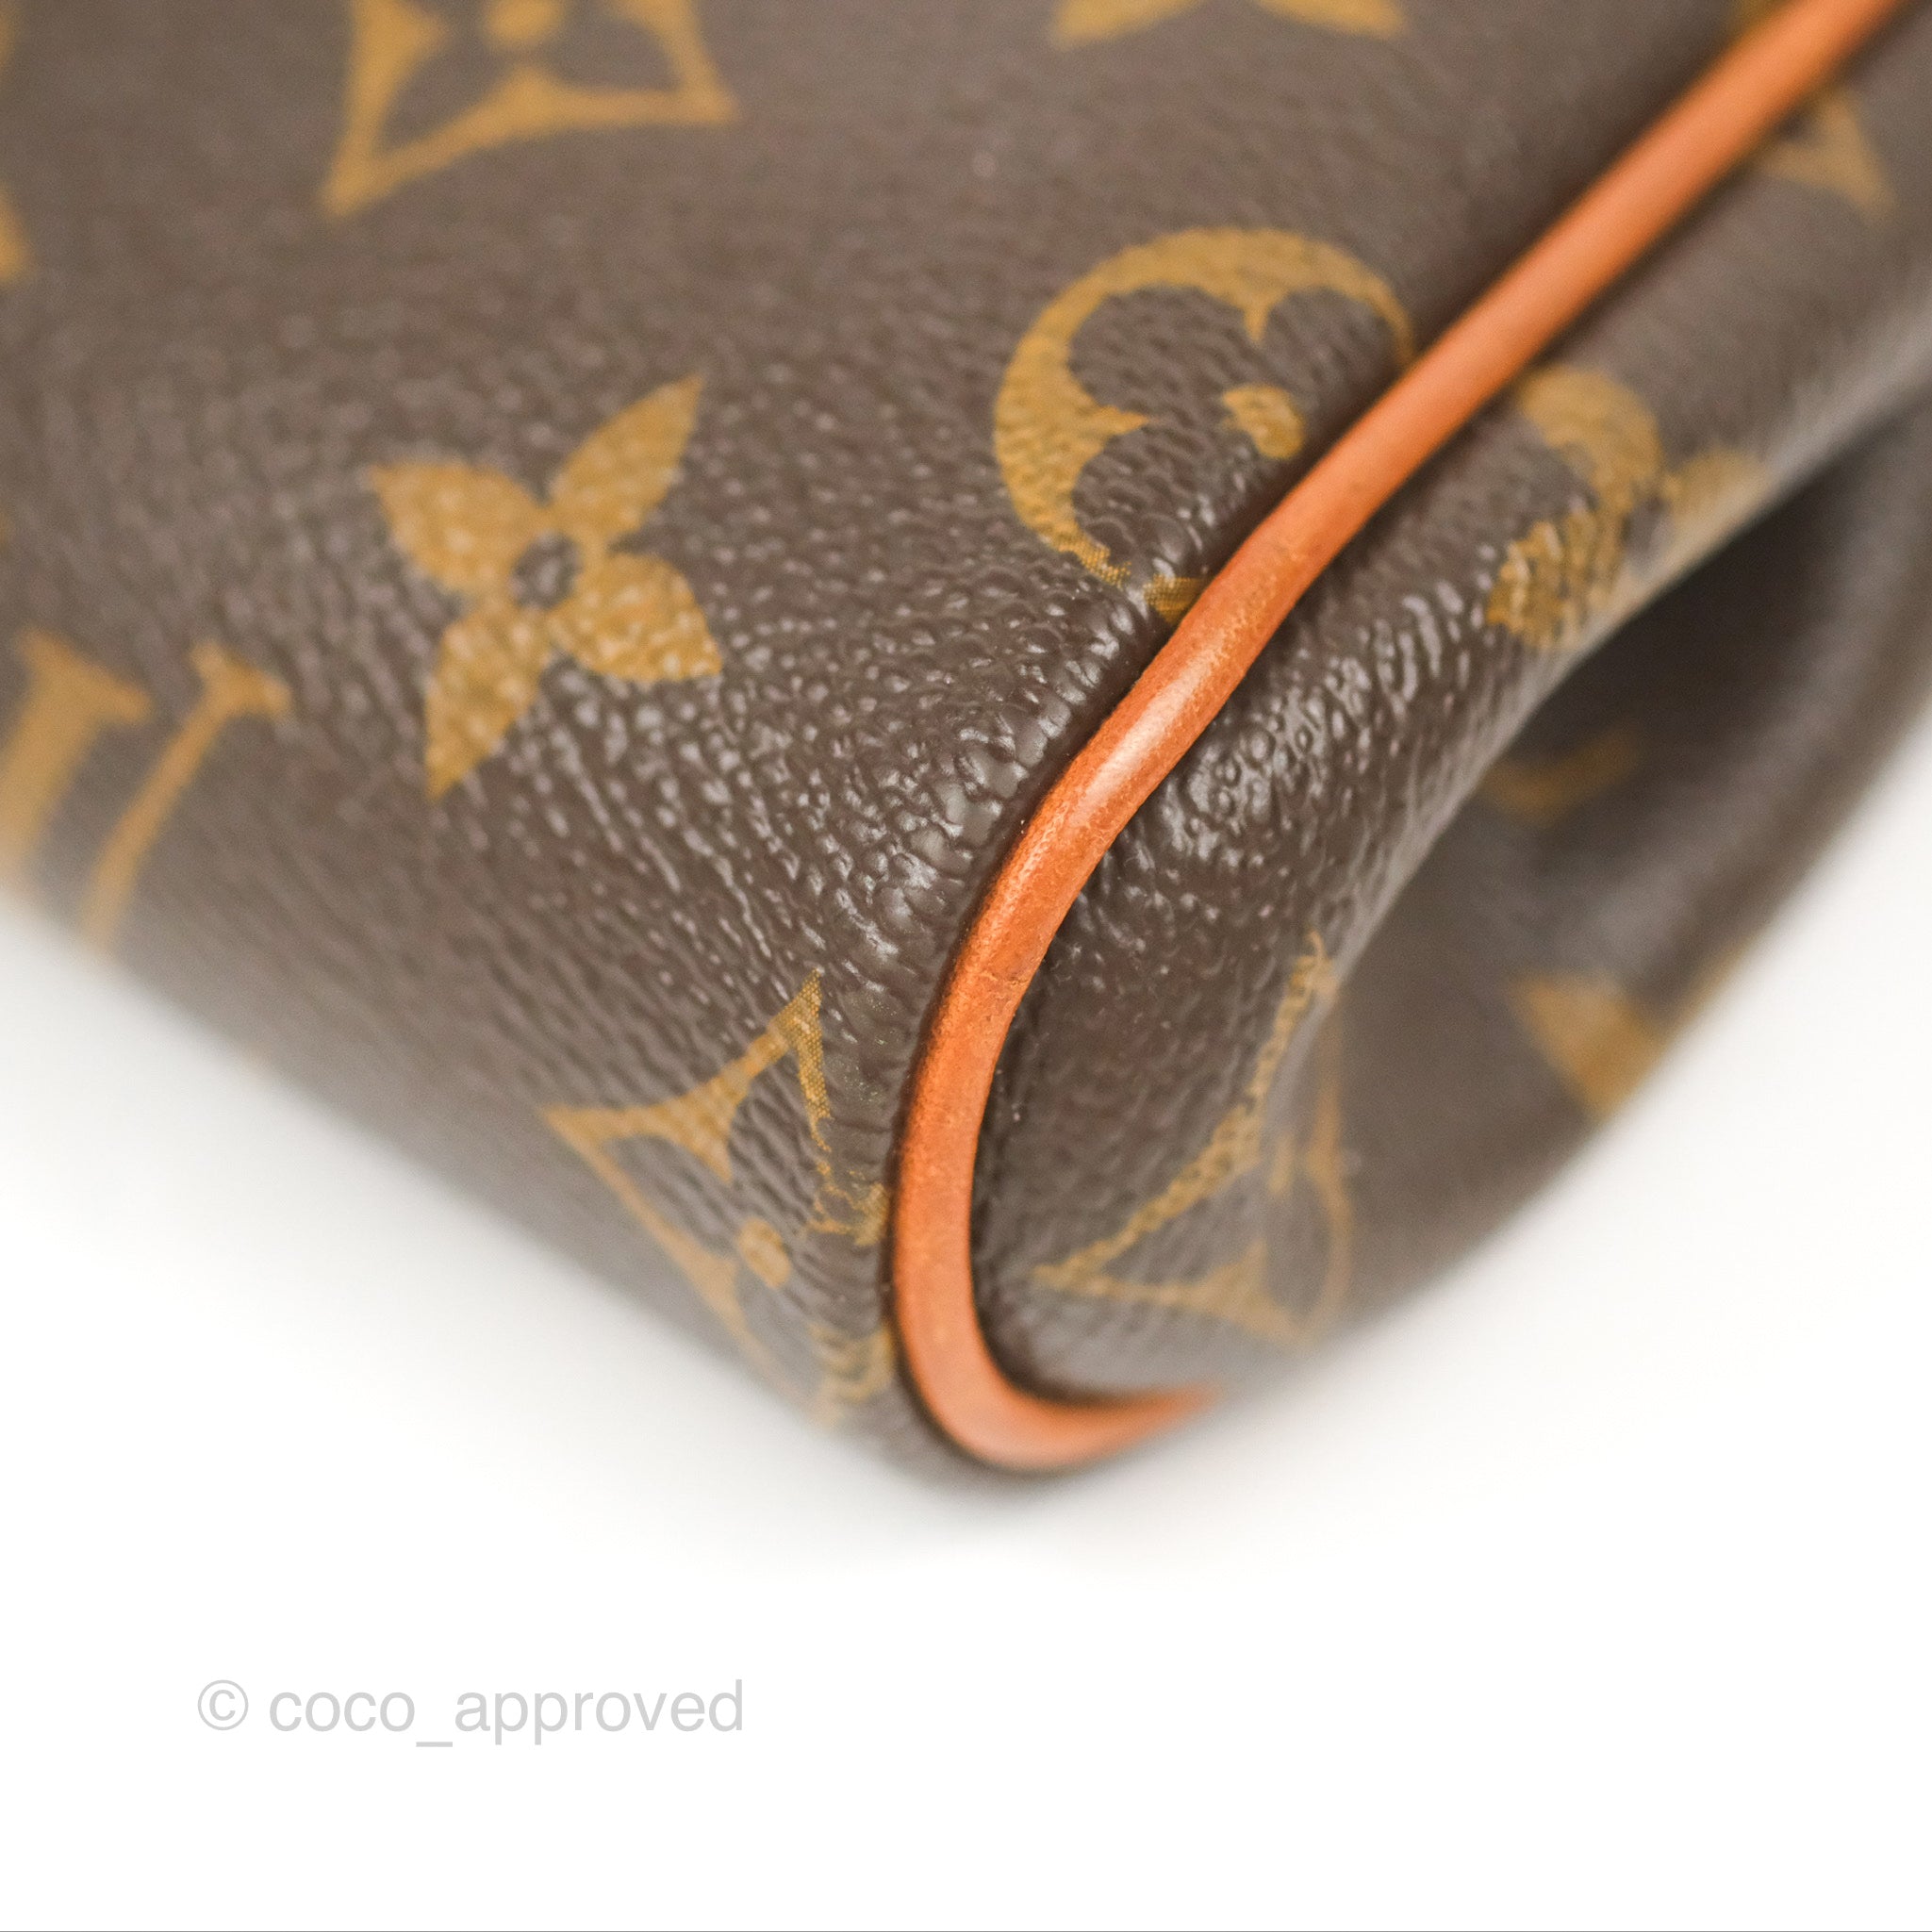 Louis Vuitton Eva Shoulder Bag Monogram Coated Canvas – Coco